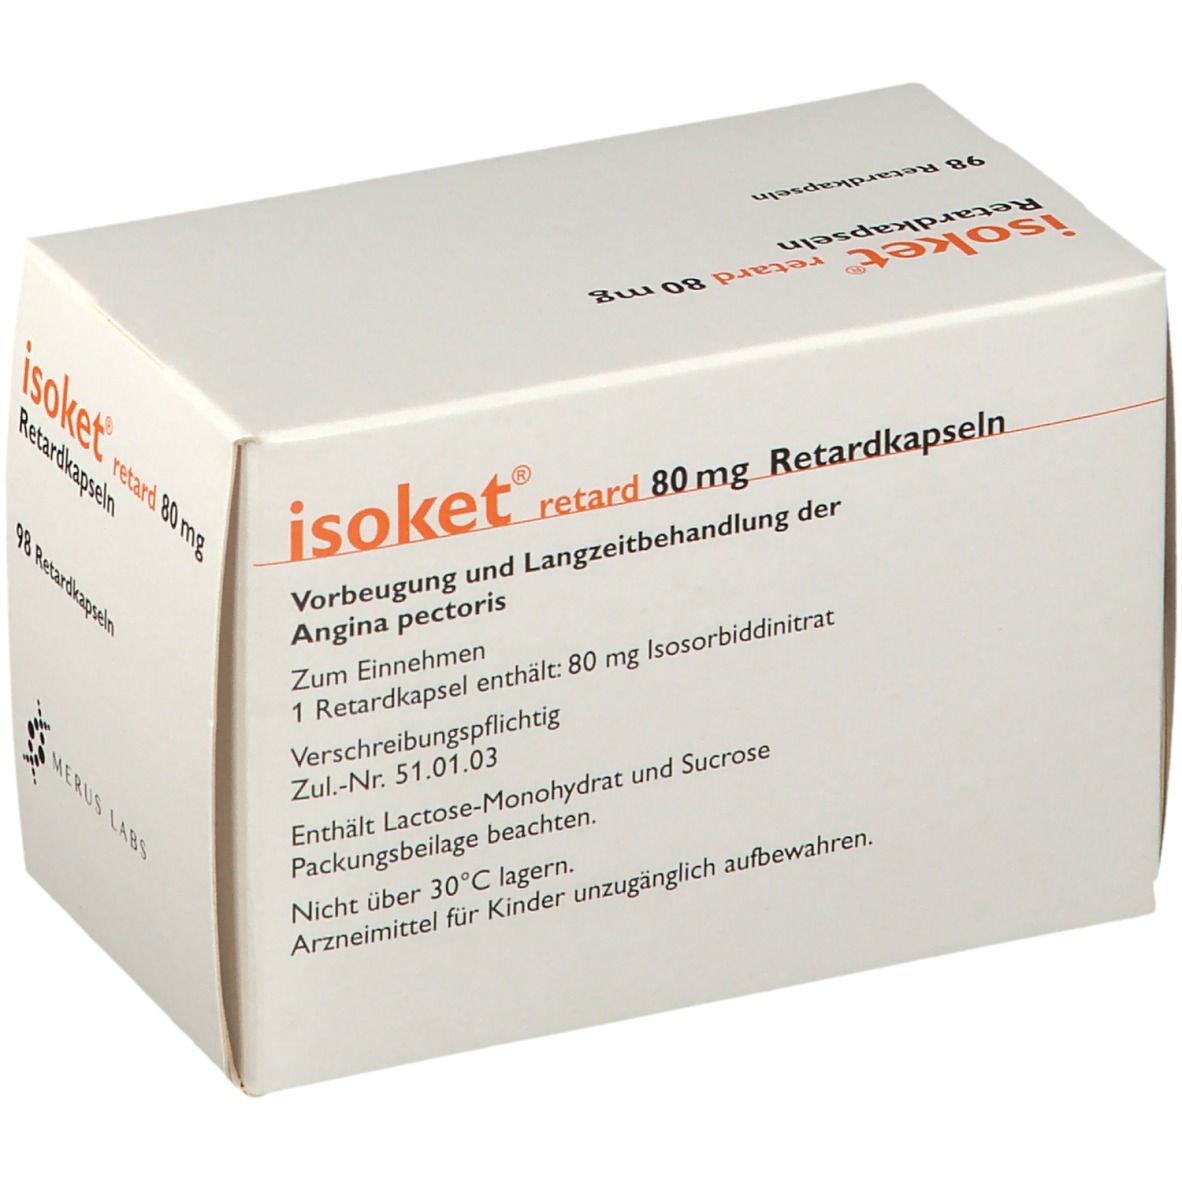 isoket® retard 80 mg